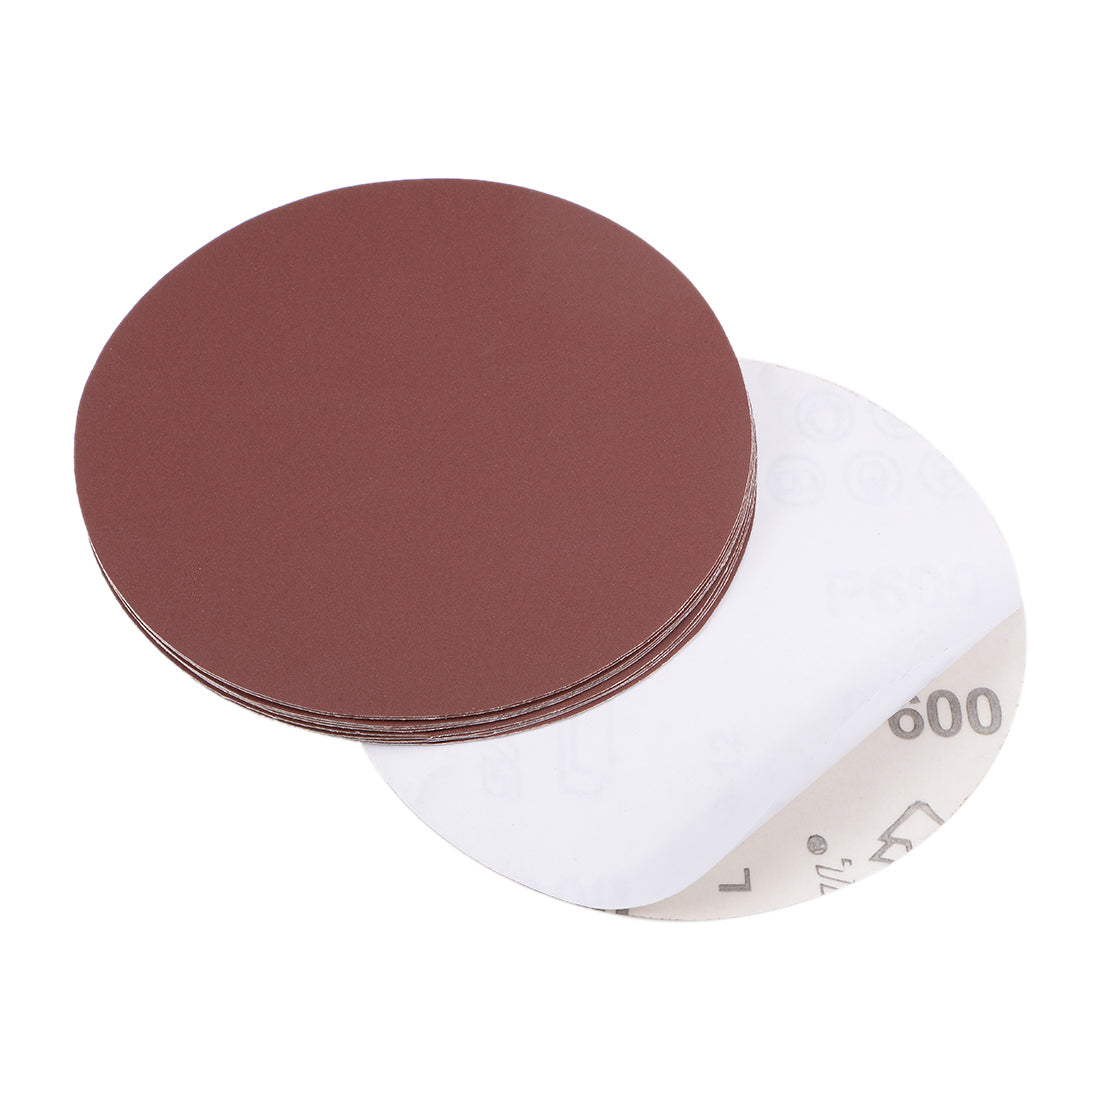 uxcell Uxcell 5-Inch PSA Sanding Disc Aluminum Oxide Adhesive Back Sandpaper 600 Grit 10 Pcs